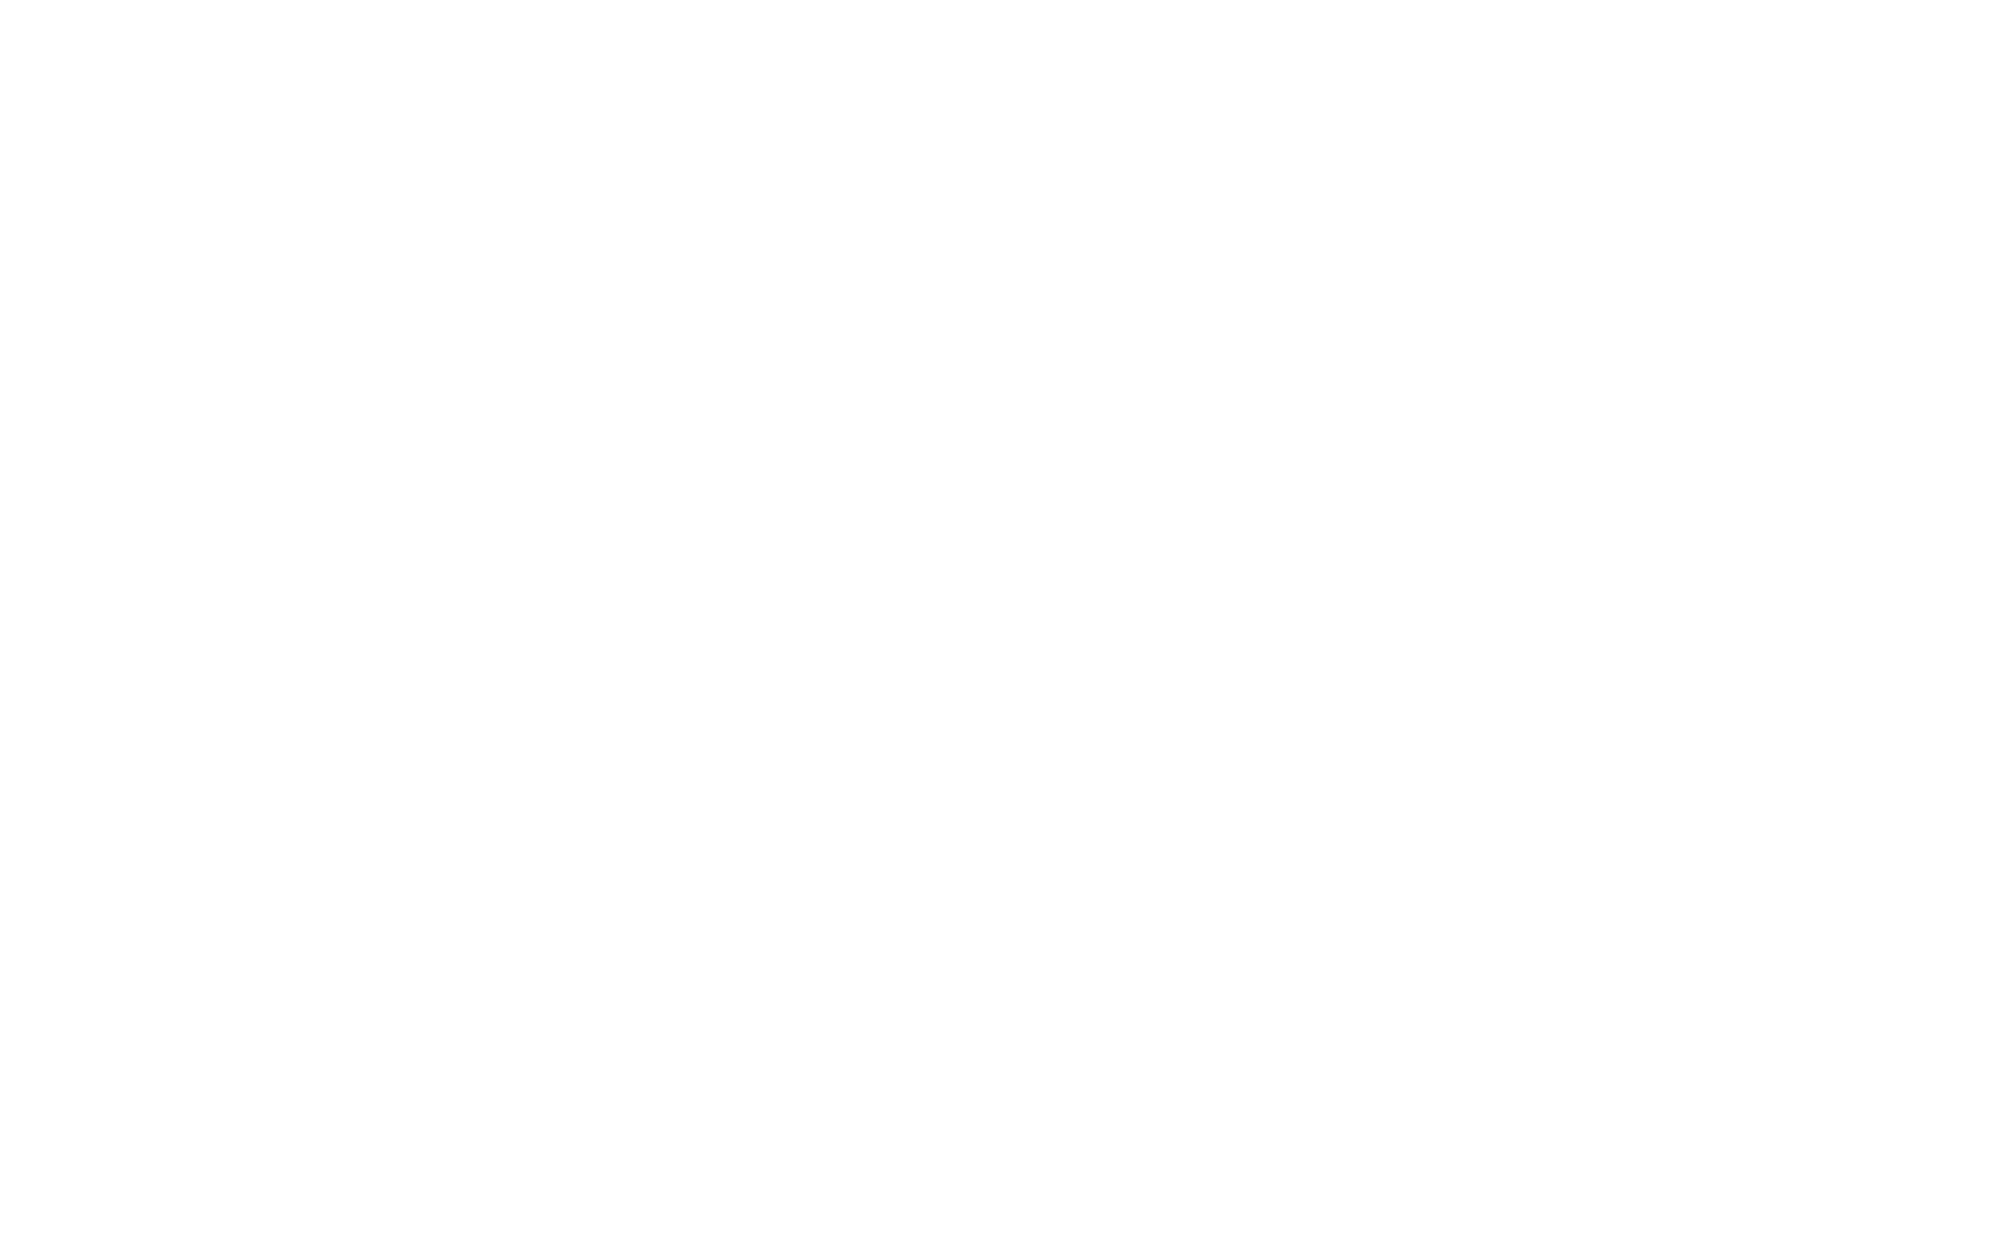 patent drawing of the Ervin Piquerez (EPSA) bayonet compressor back